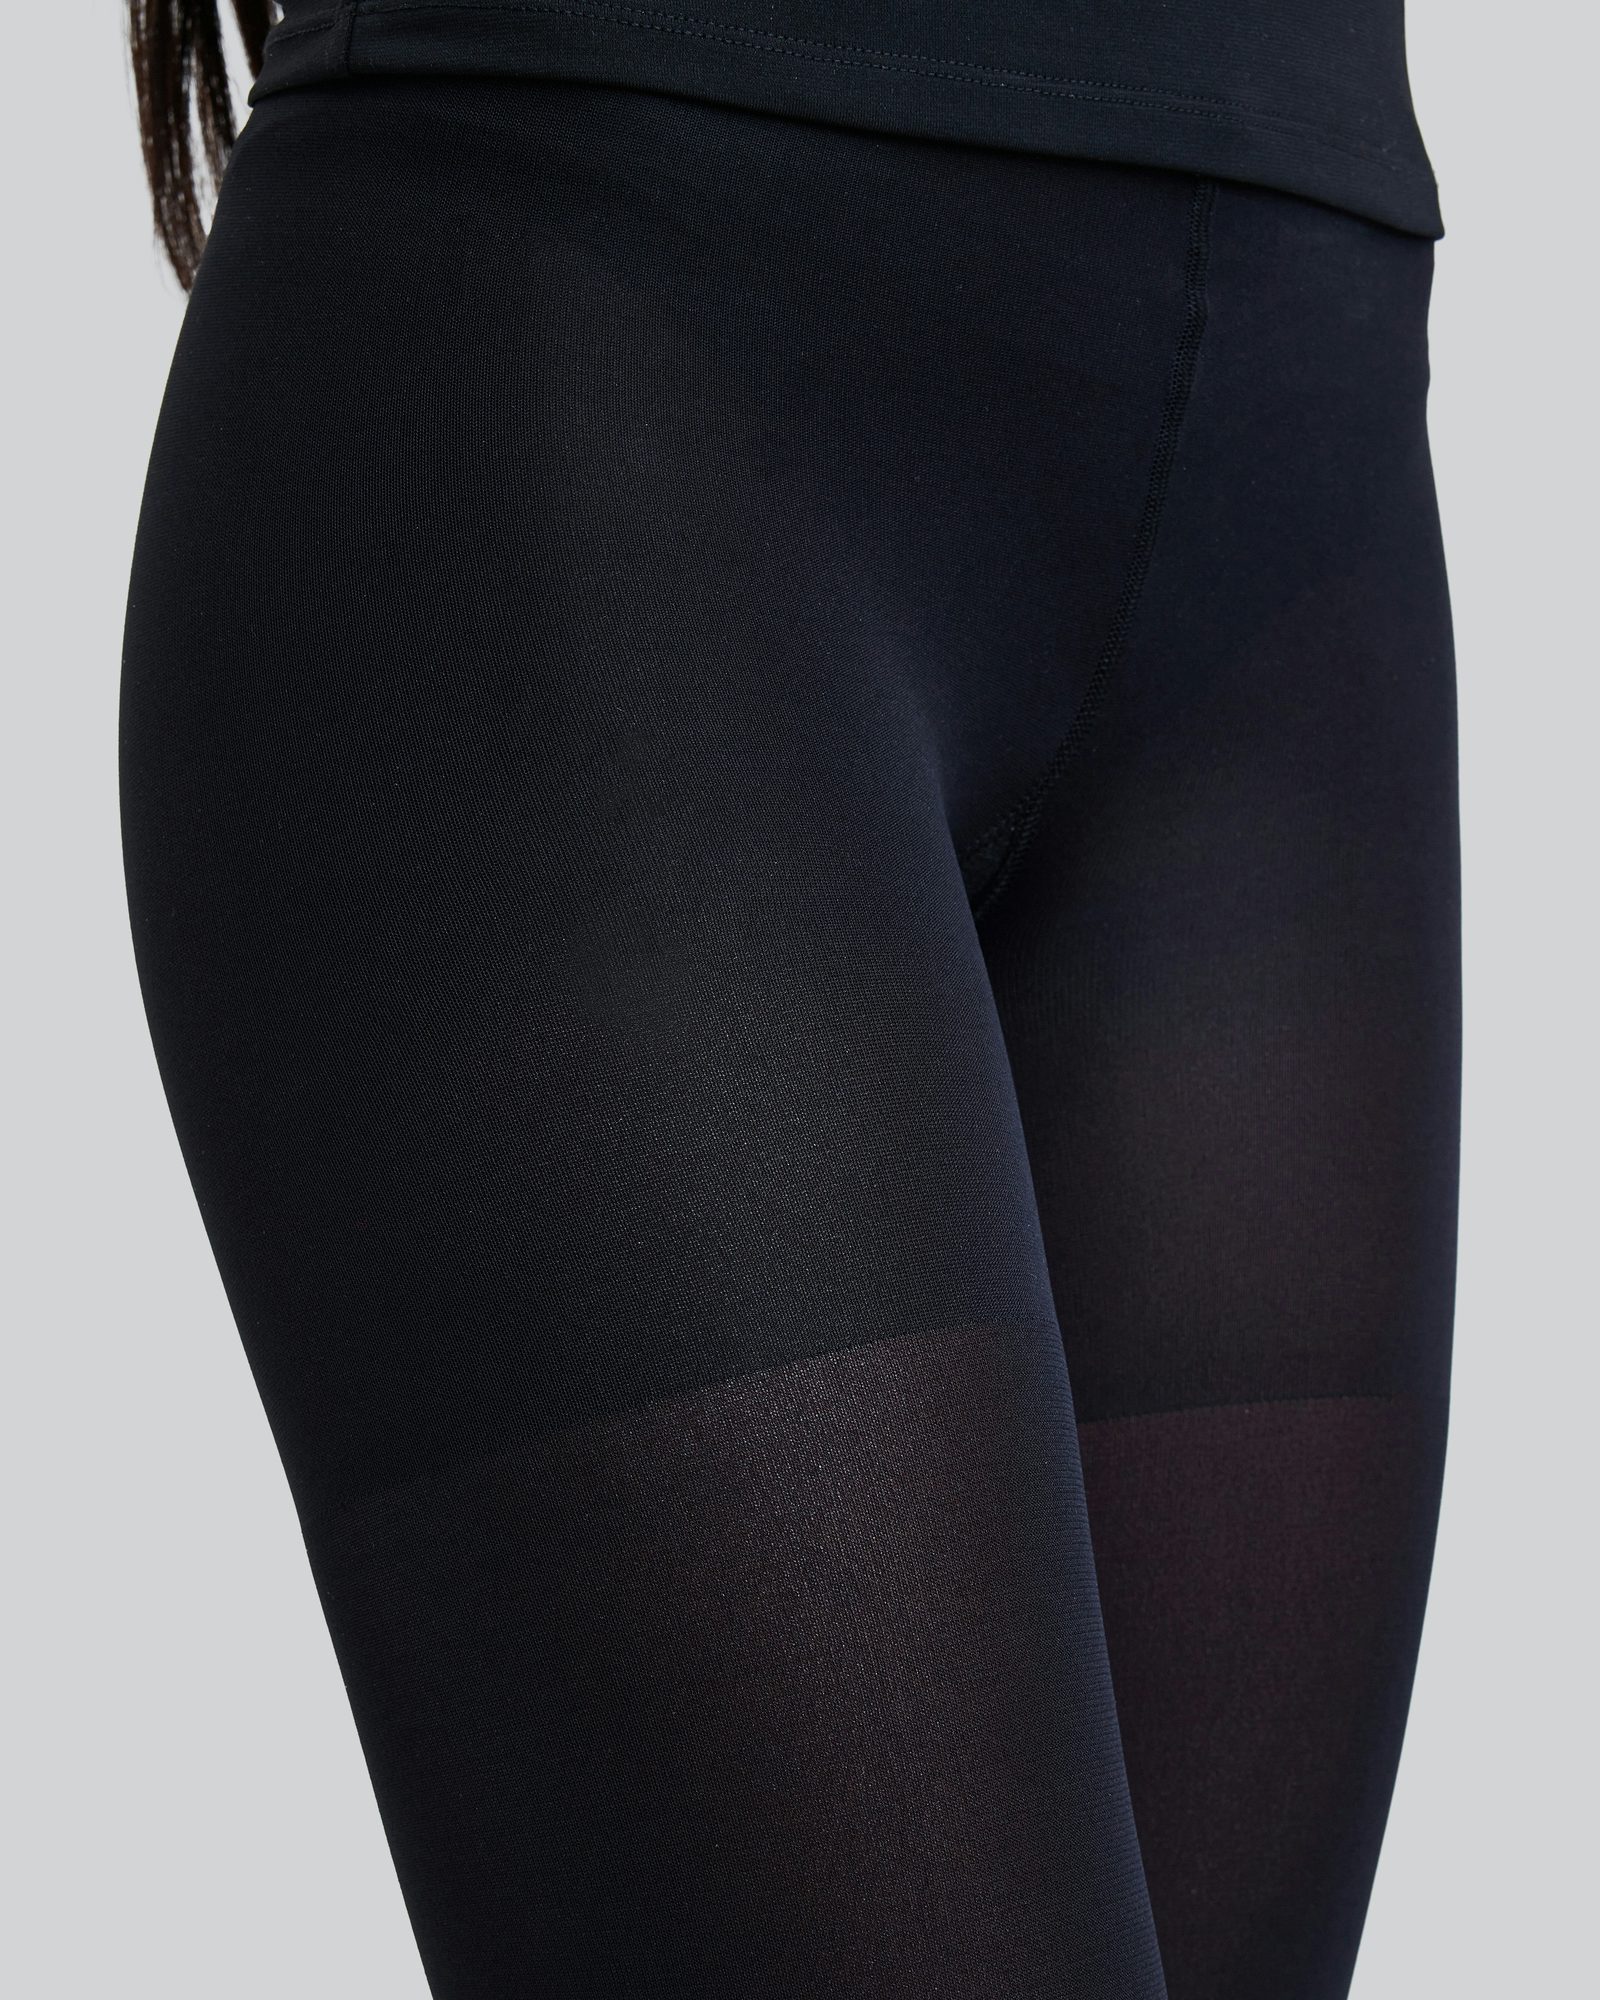 Zip-up shaping tights - Black - Ladies